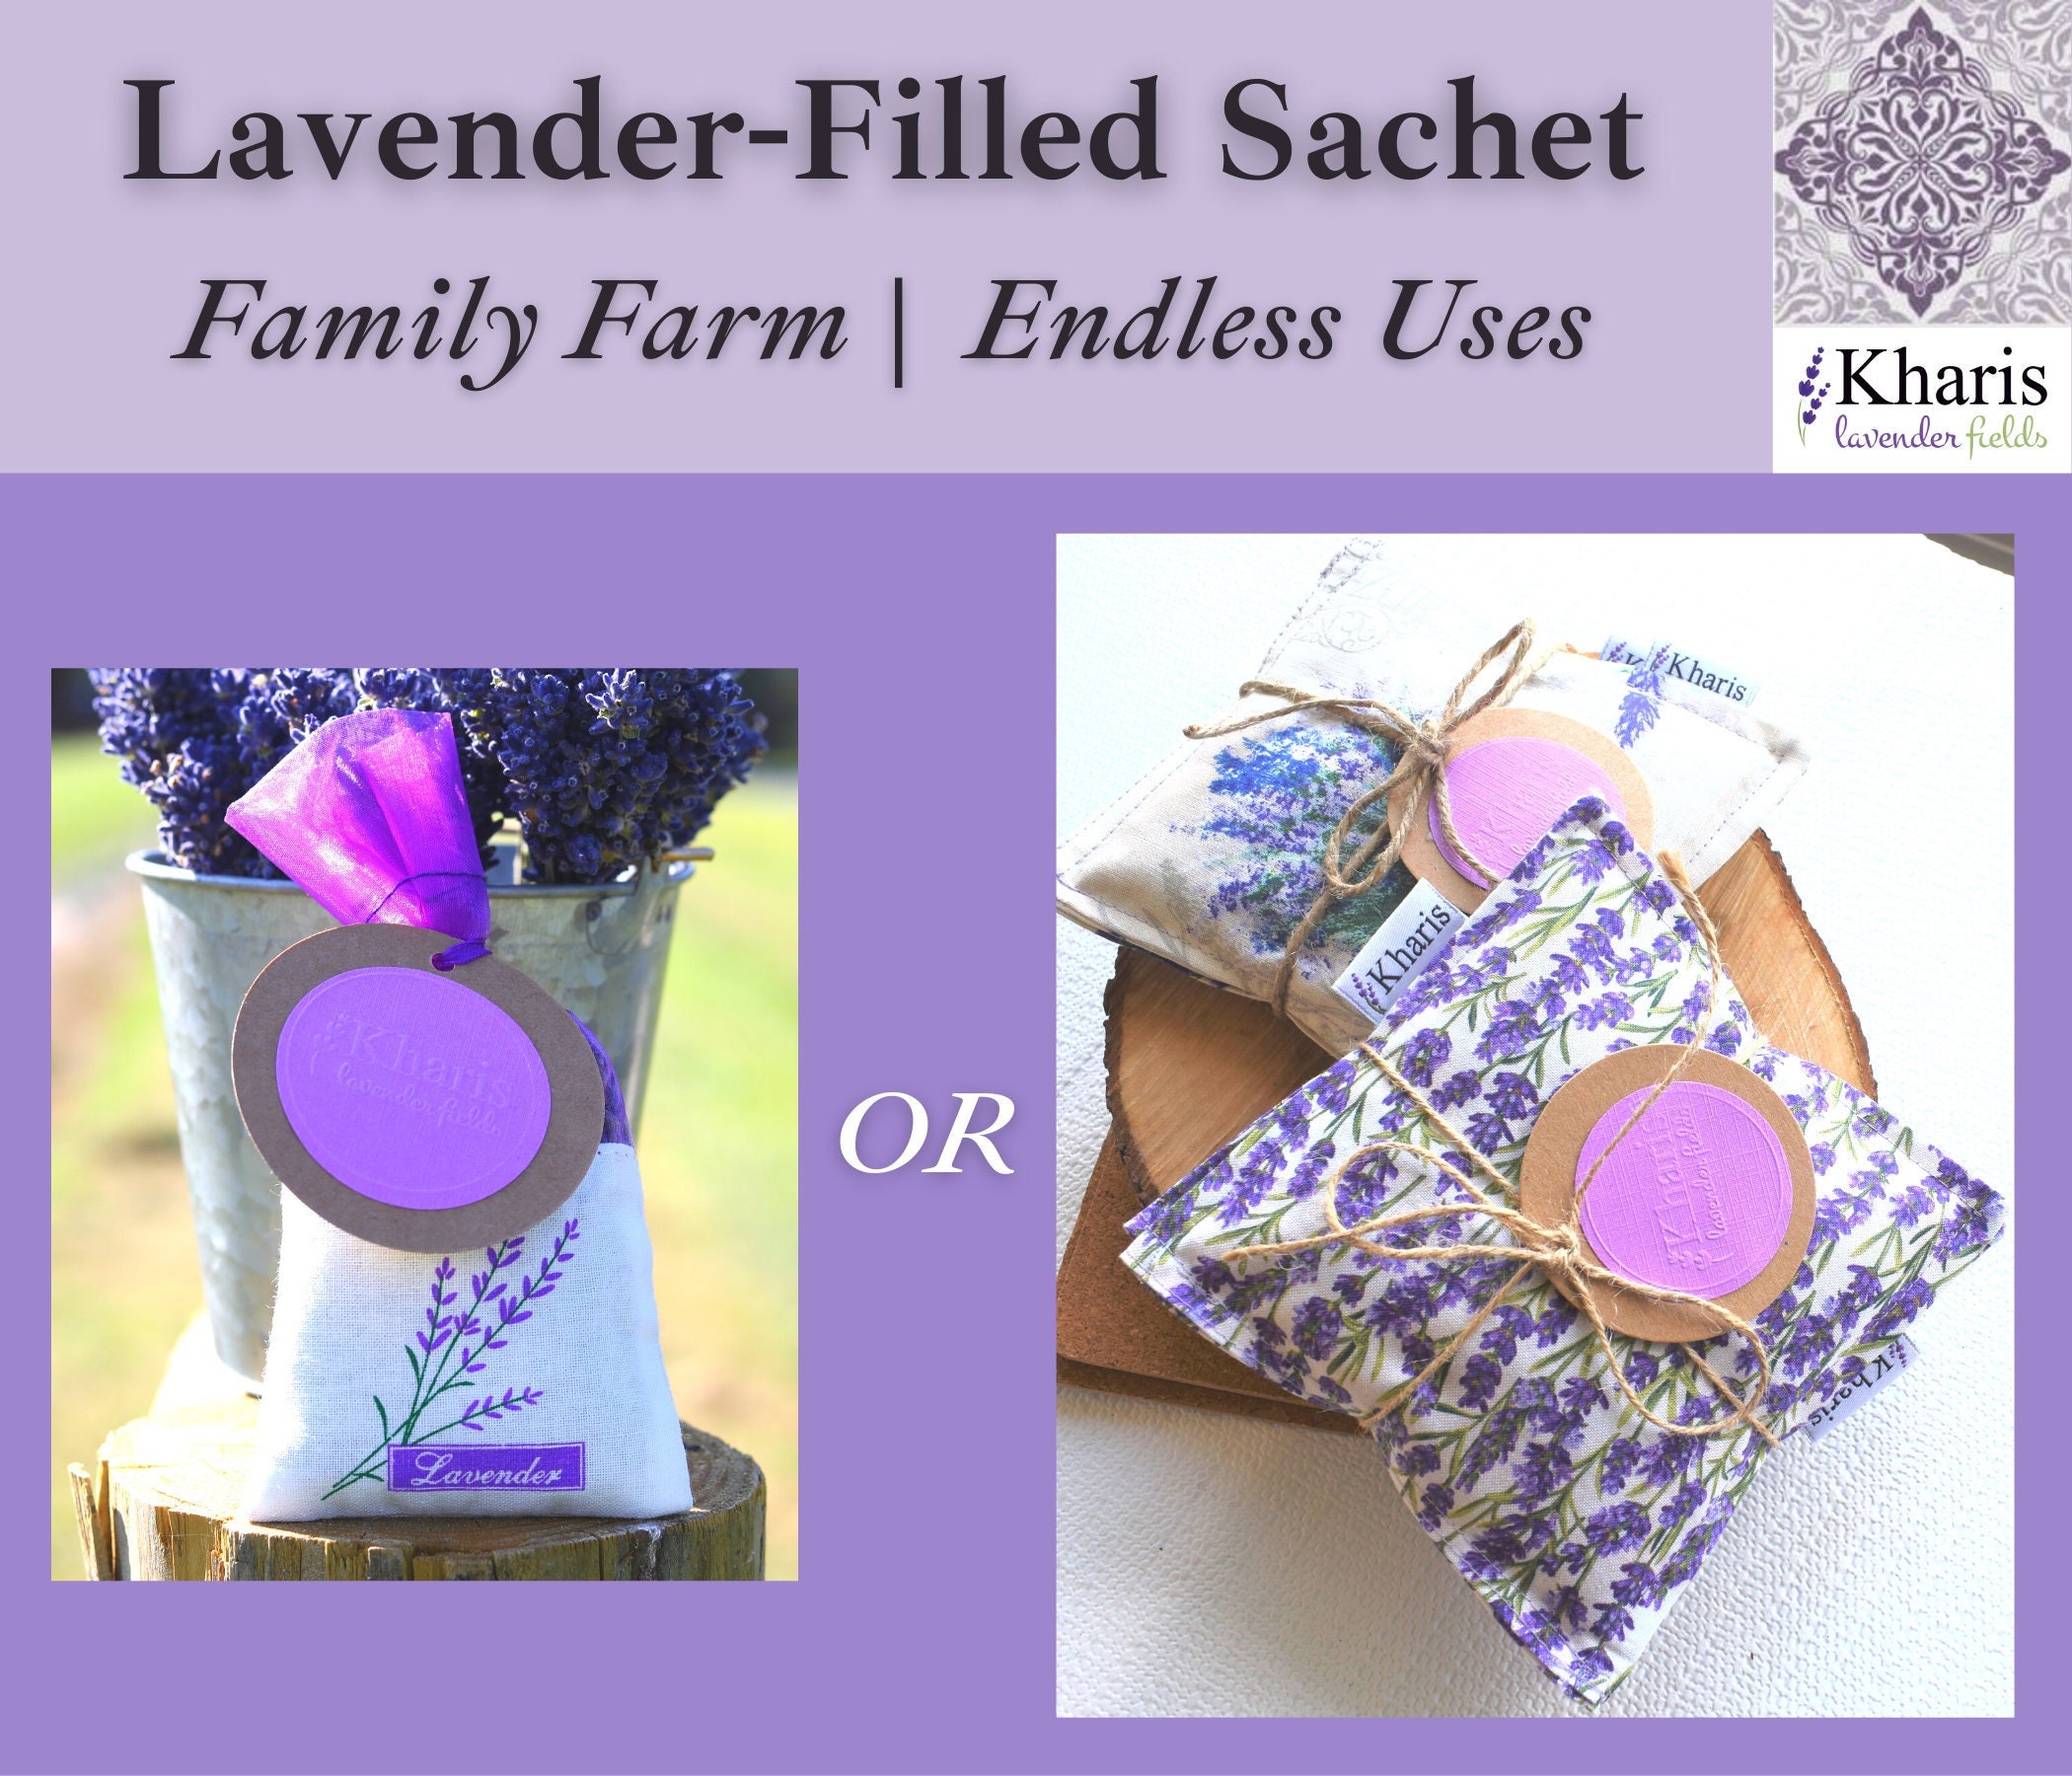 Lavender Sachets - Morehouse Farm